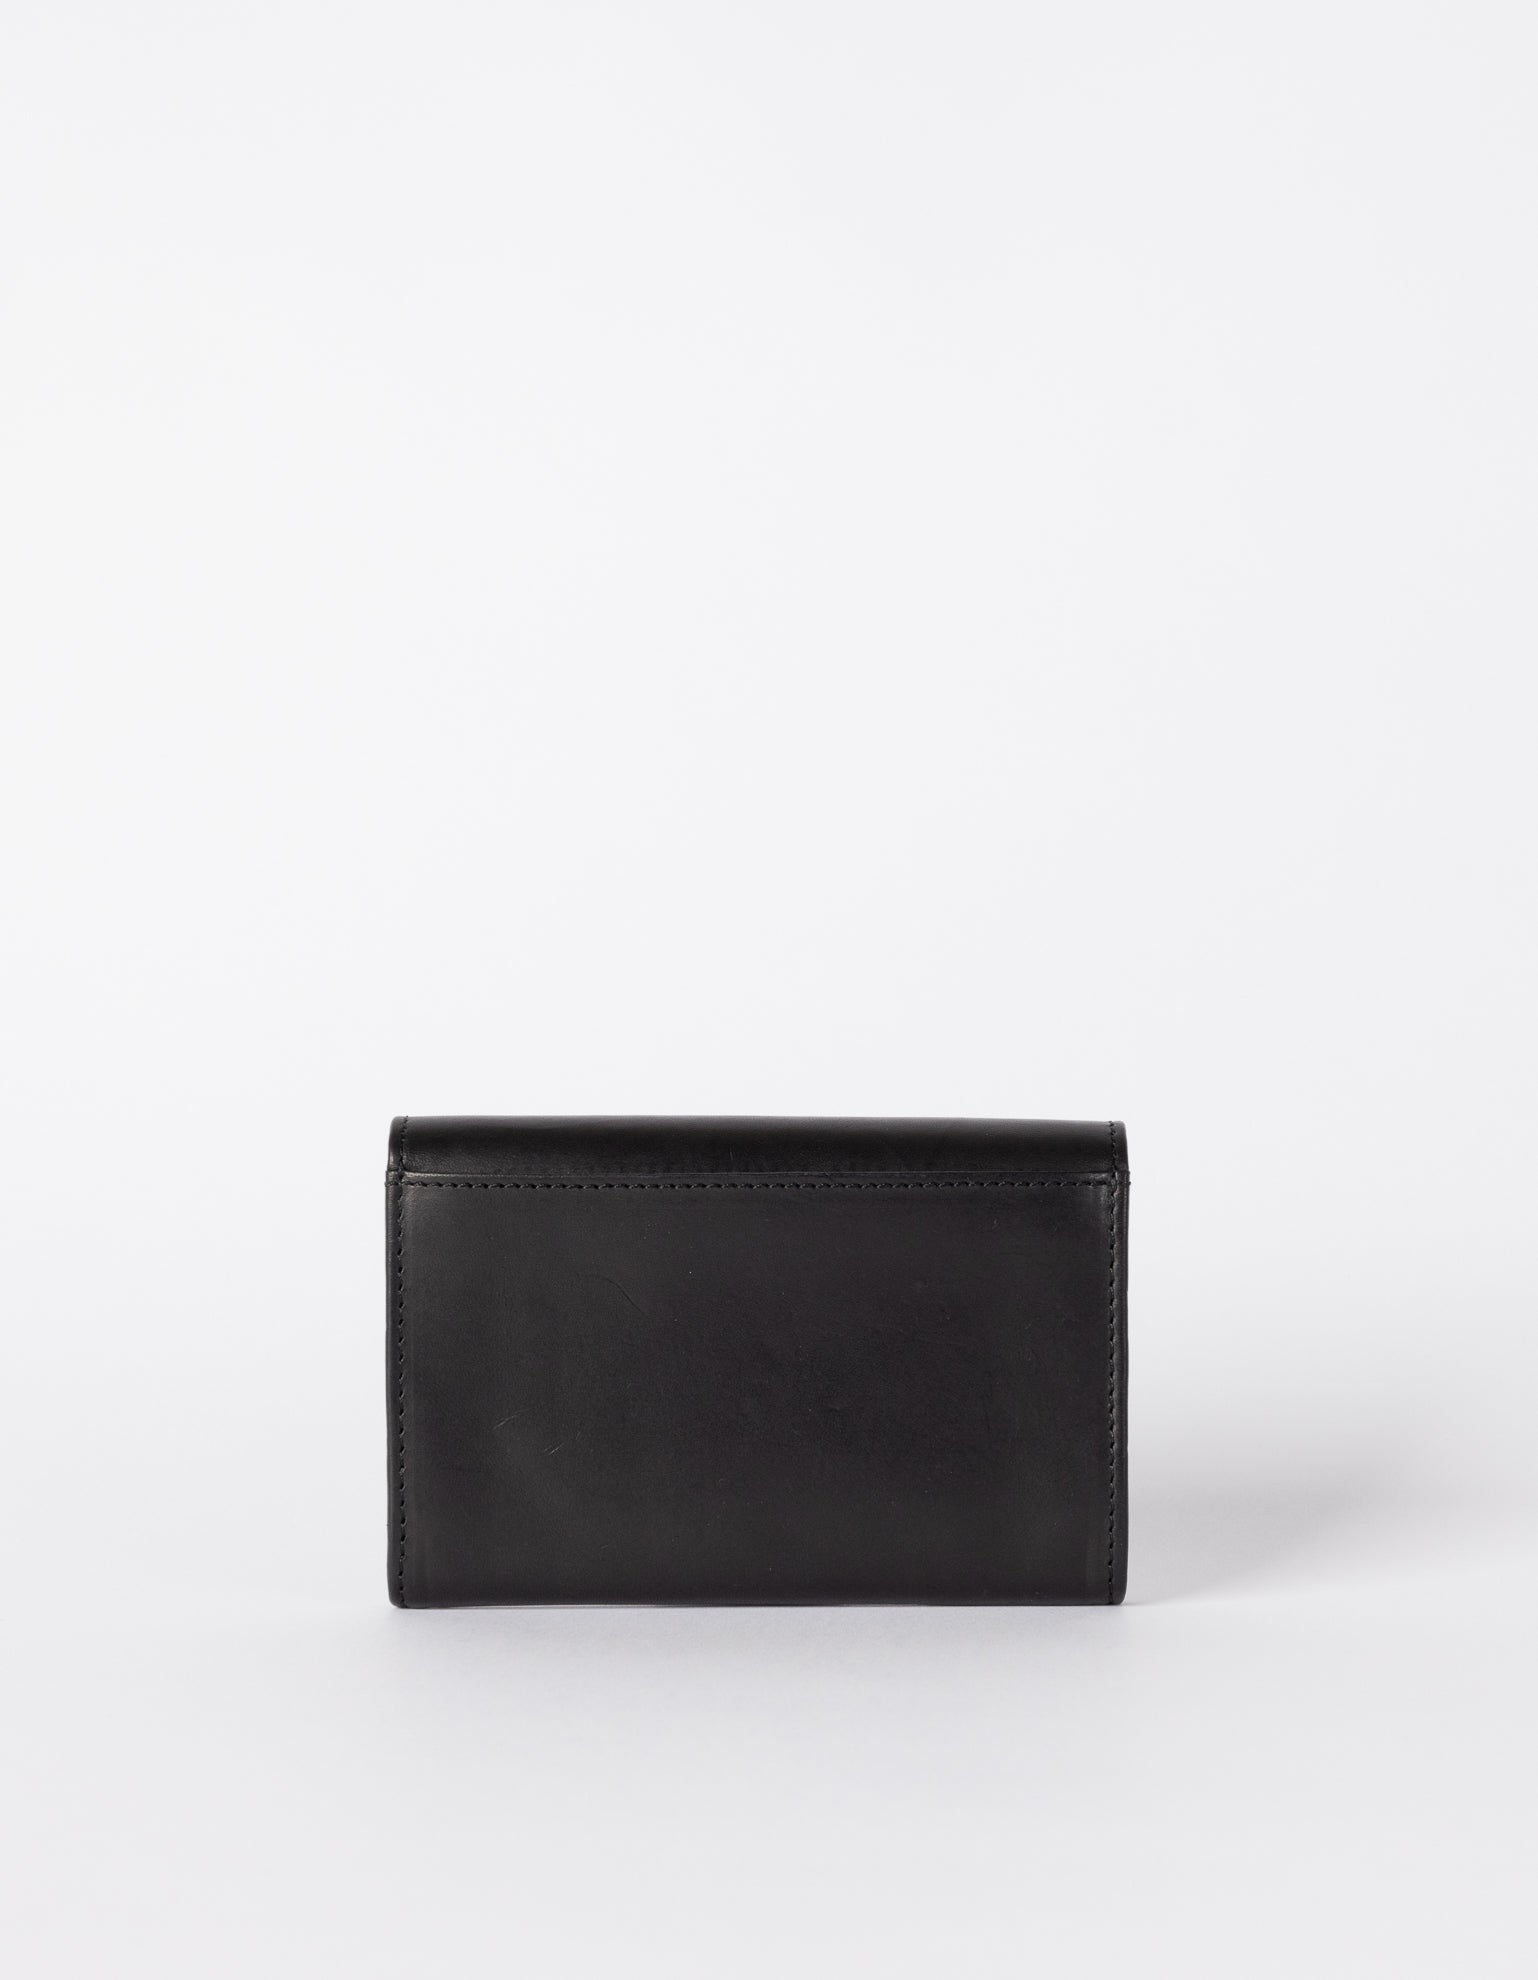 Black classic leather purse - back product image